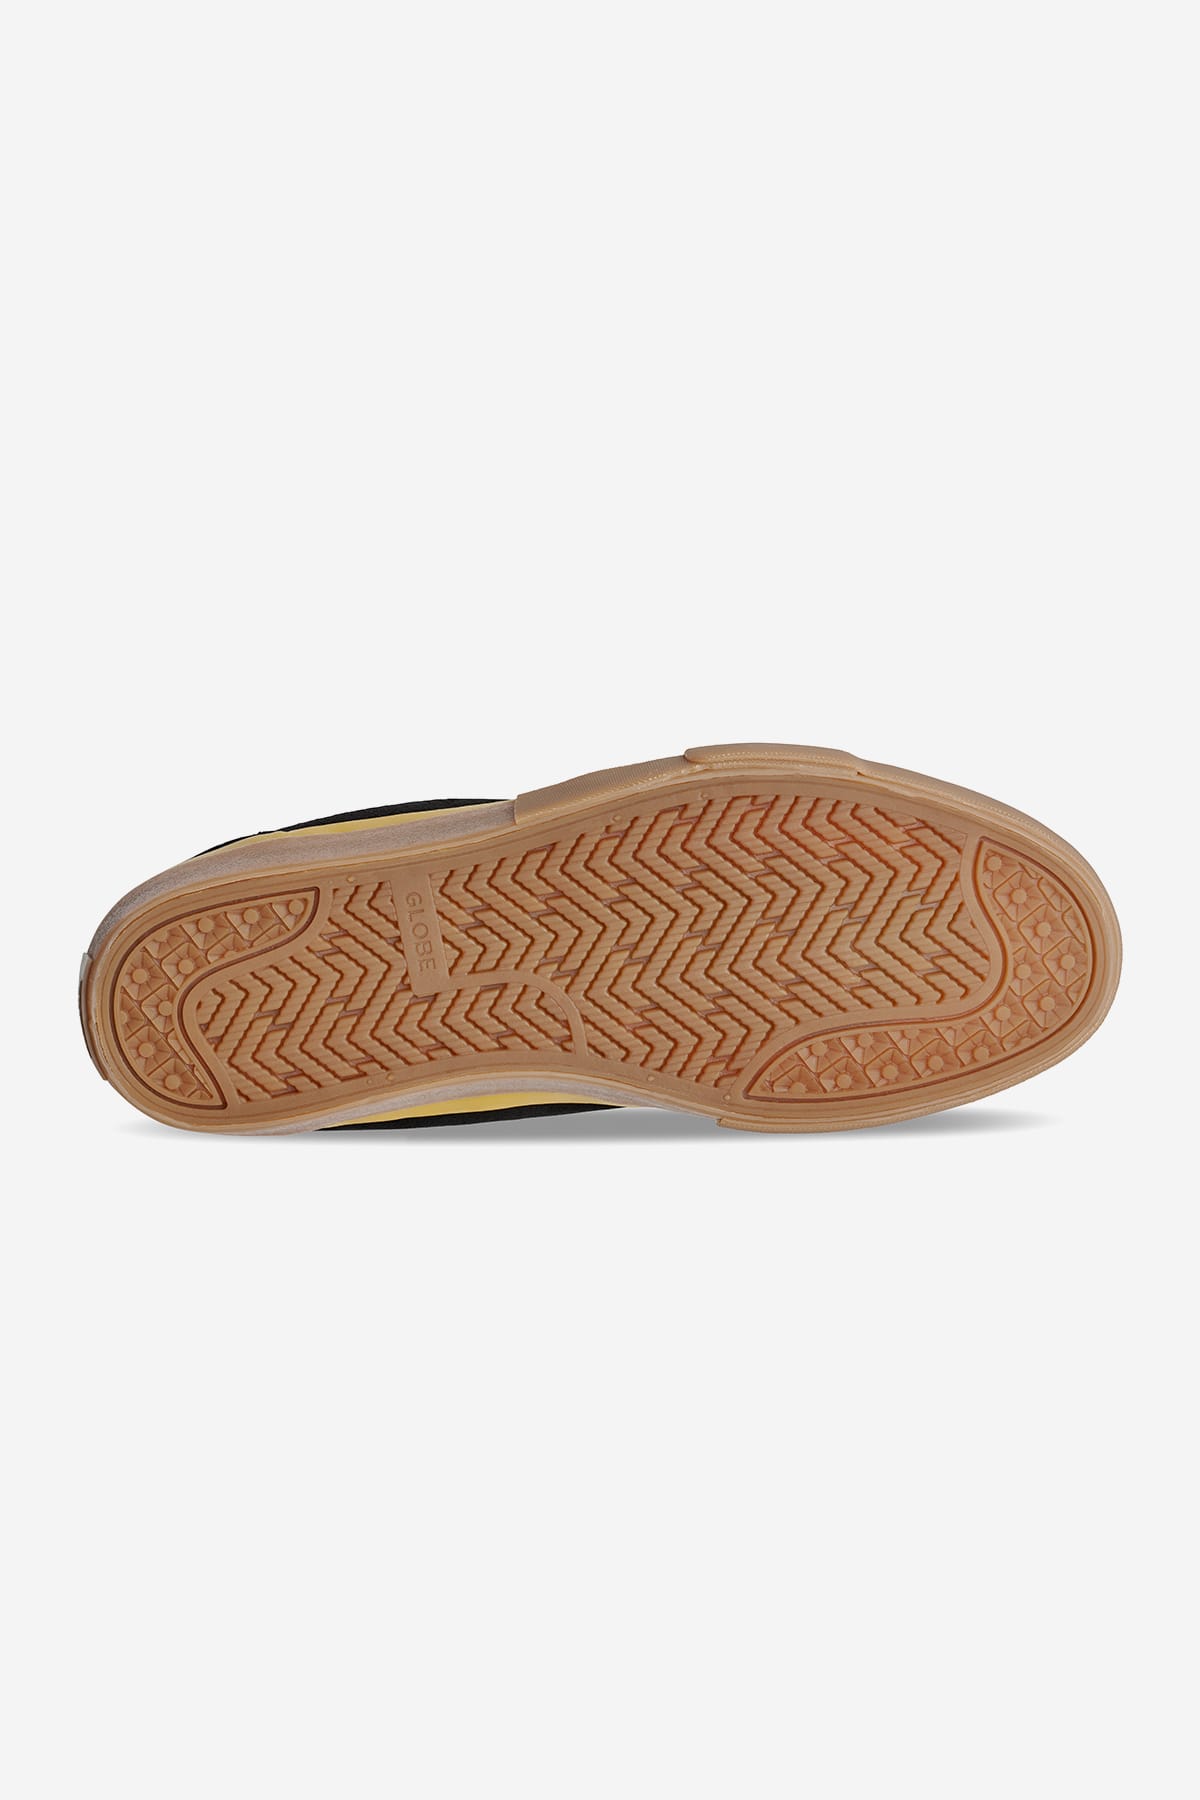 Globe - Mahalo Plus - Negro/Mustard - skateboard Zapatos